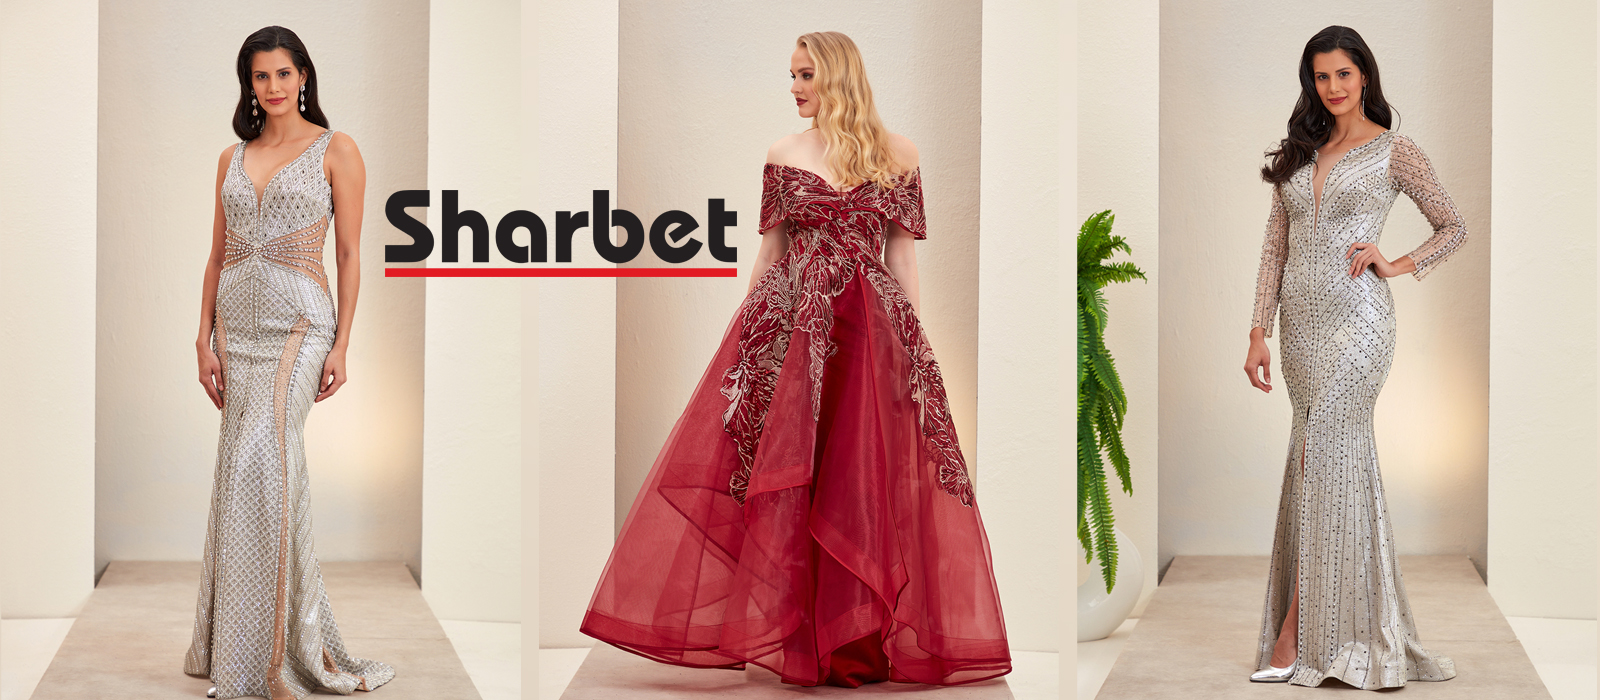 Evening Dresses - Sharbet Evening Dress